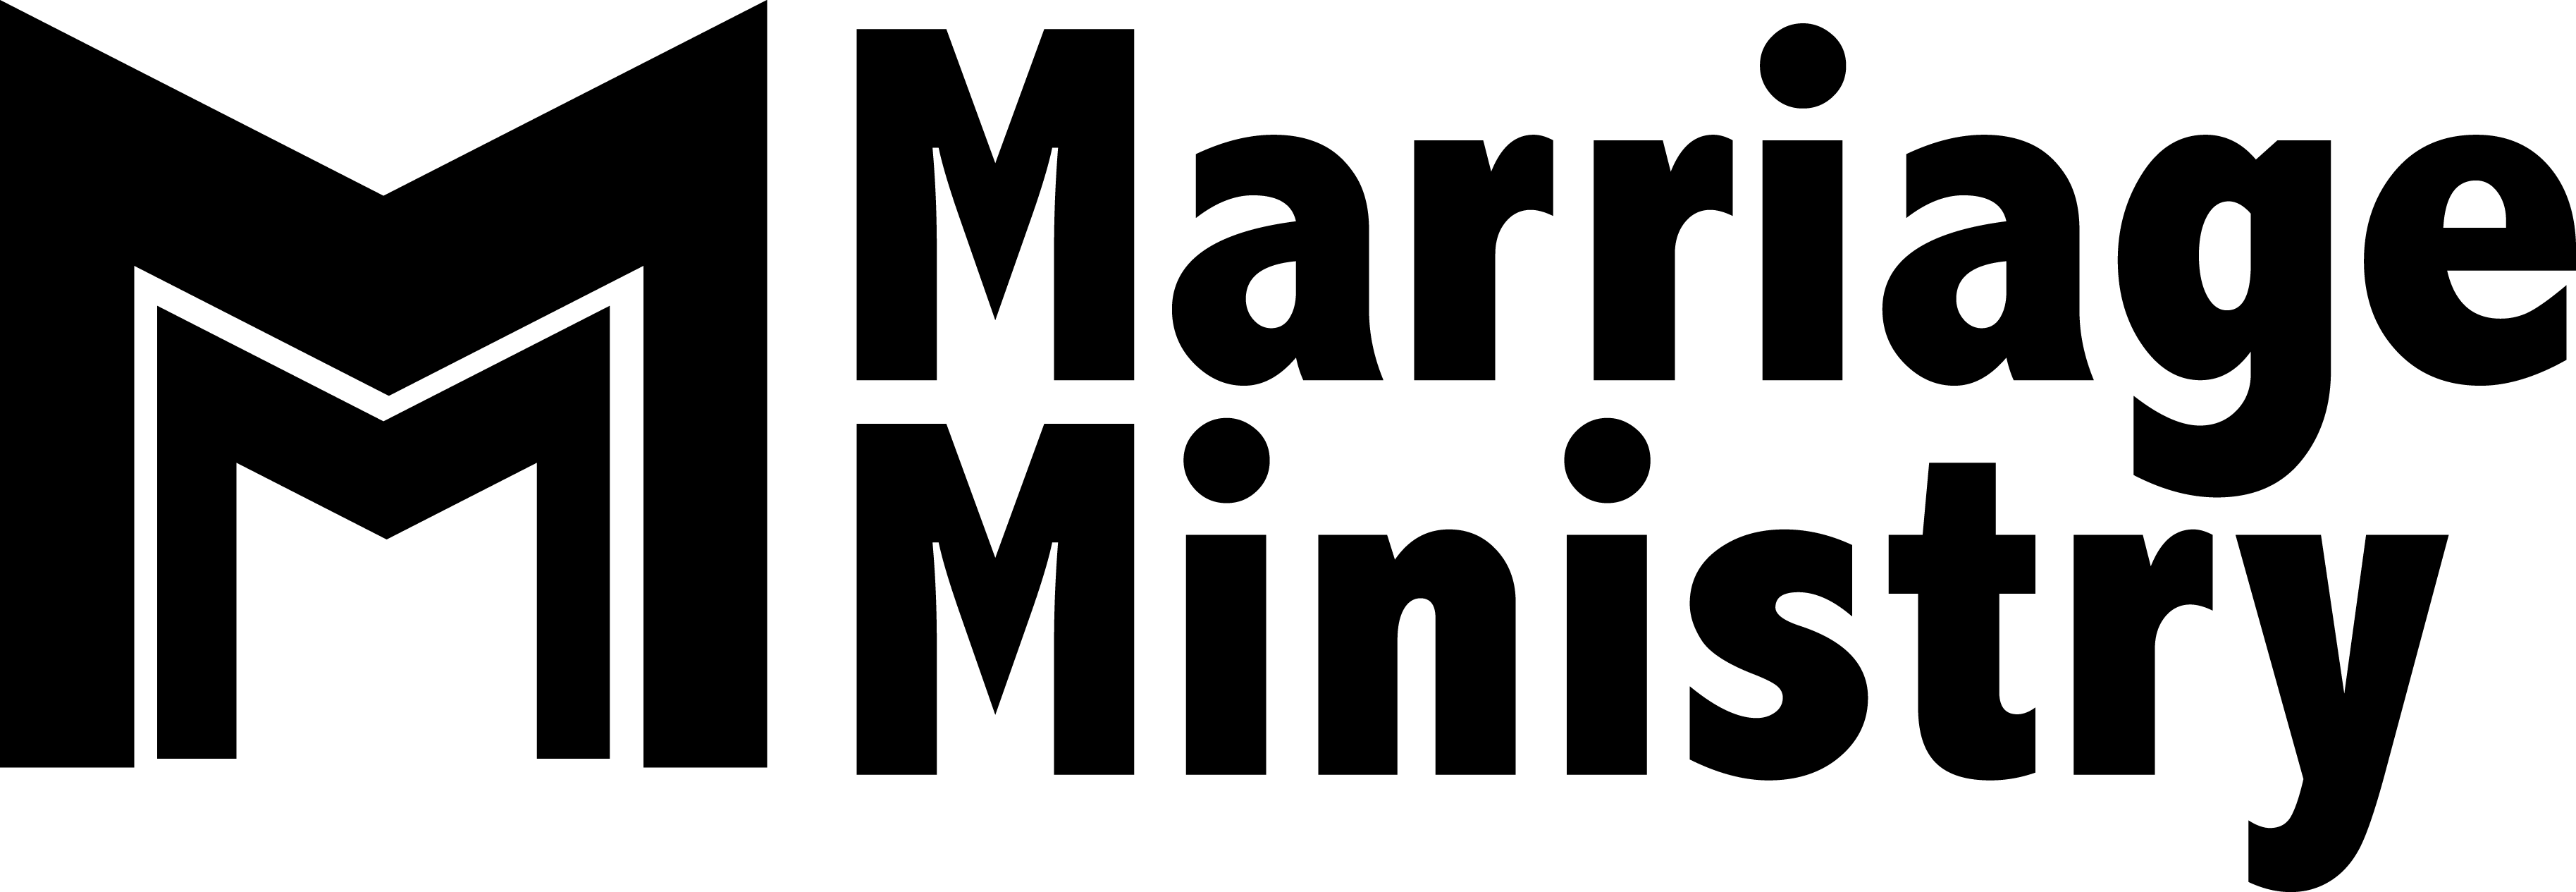 November Logo - Marriage Ministry logo idea, November 2009. My Graphic Design